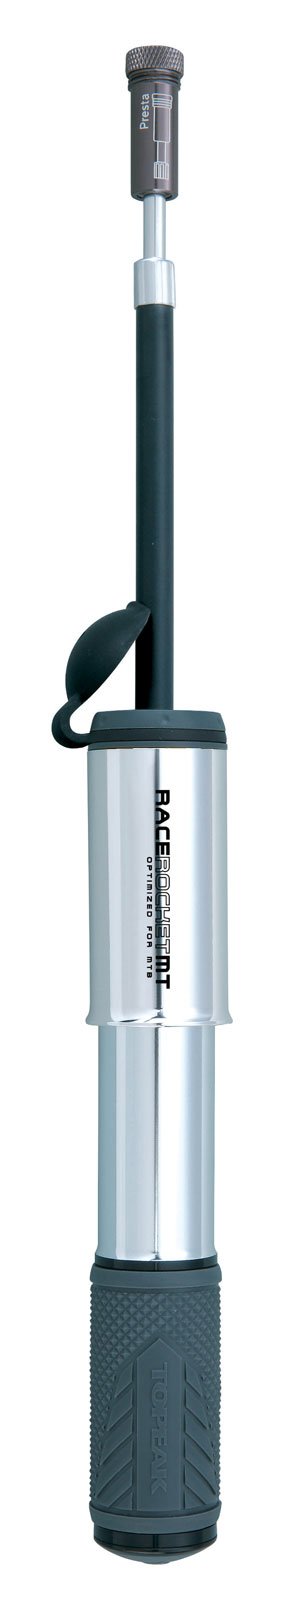 Topeak Mt Race Rocket Pump (Silver) - RACKTRENDZ